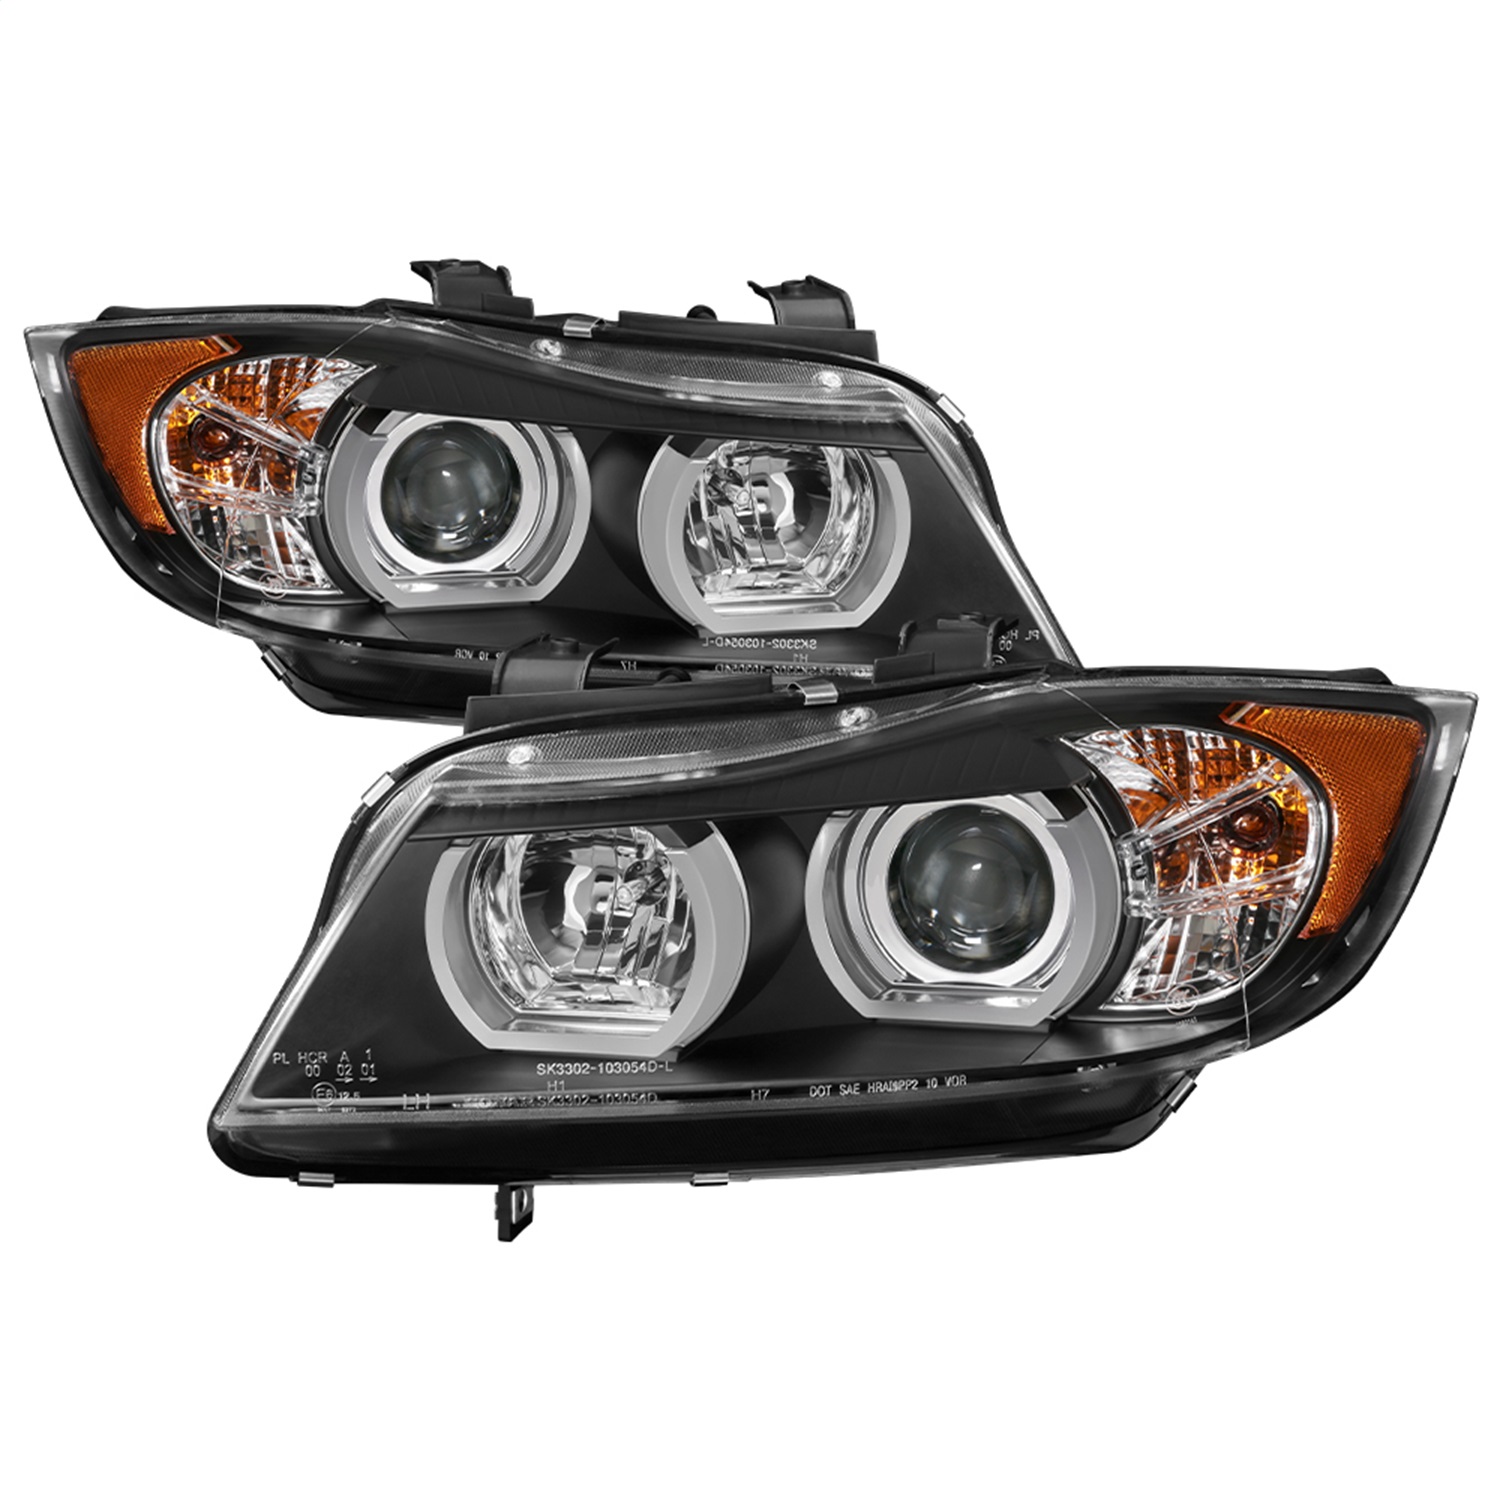 Spyder Auto 5083852 DRL LED Projector Headlights